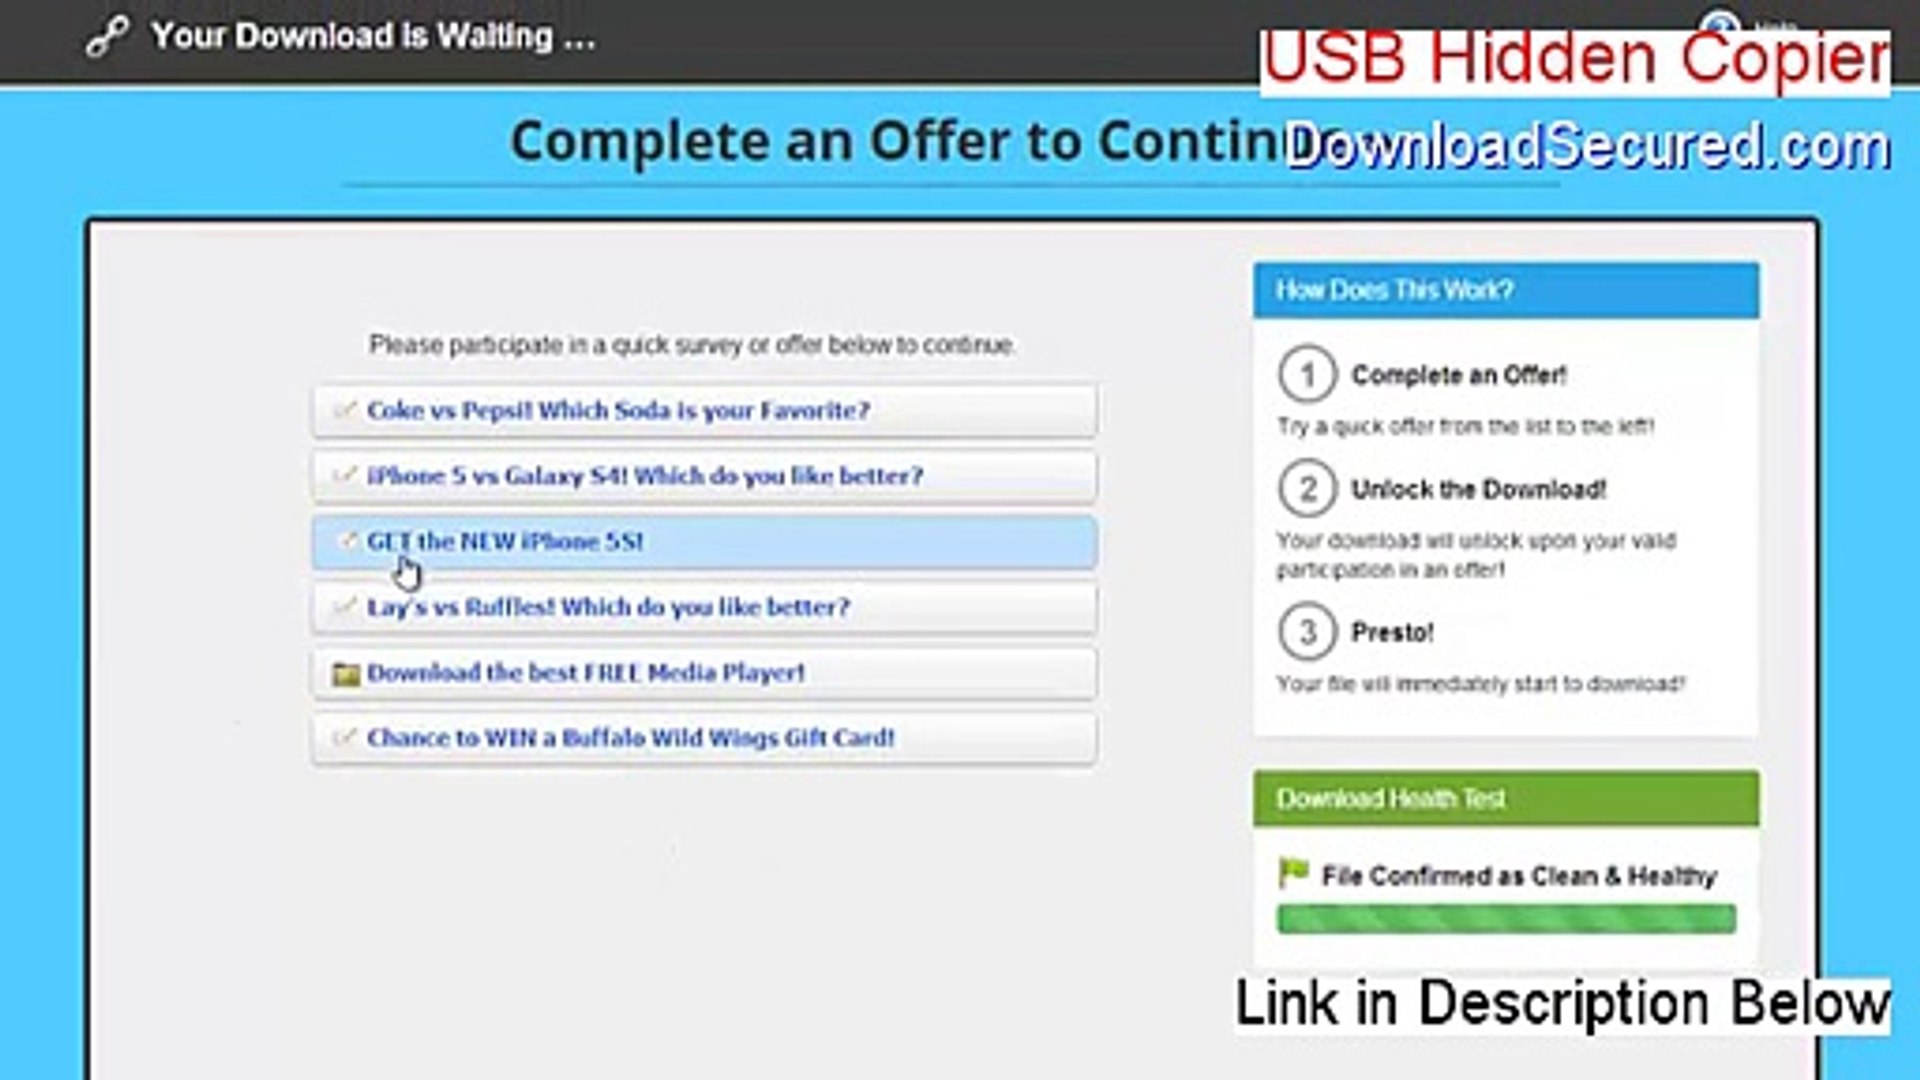 USB Hidden Copier Full (usb hidden copier 2.0) - video Dailymotion